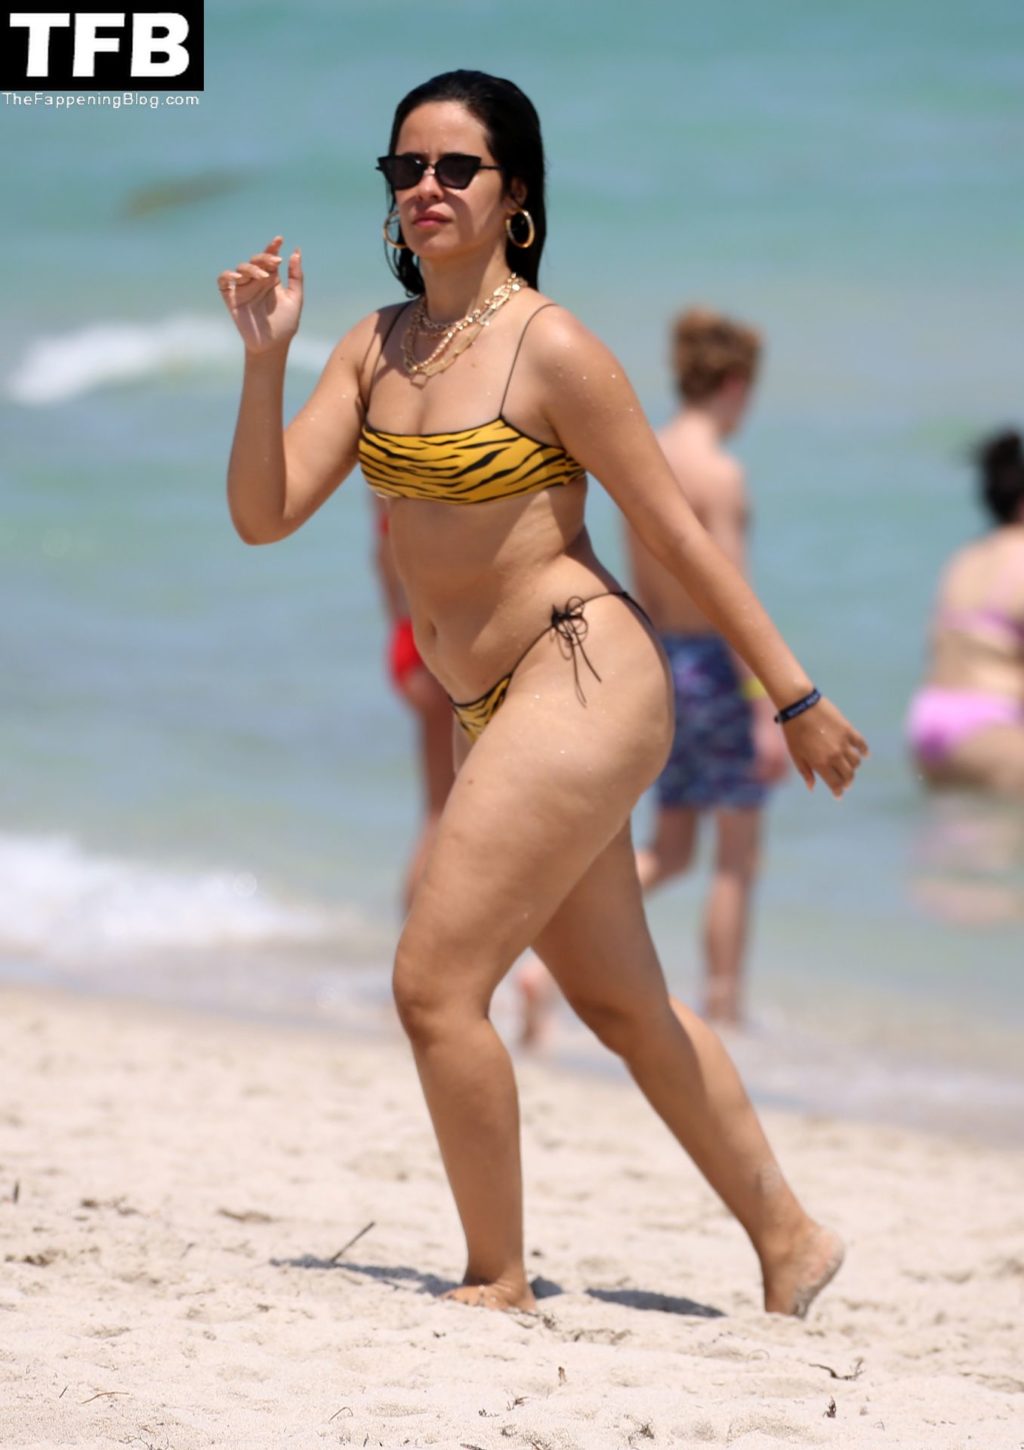 Camila Cabello Sexy The Fappening Blog 60 1024x1450 - Camila Cabello Displays Her Summer-Ready Body in Miami (108 Photos)